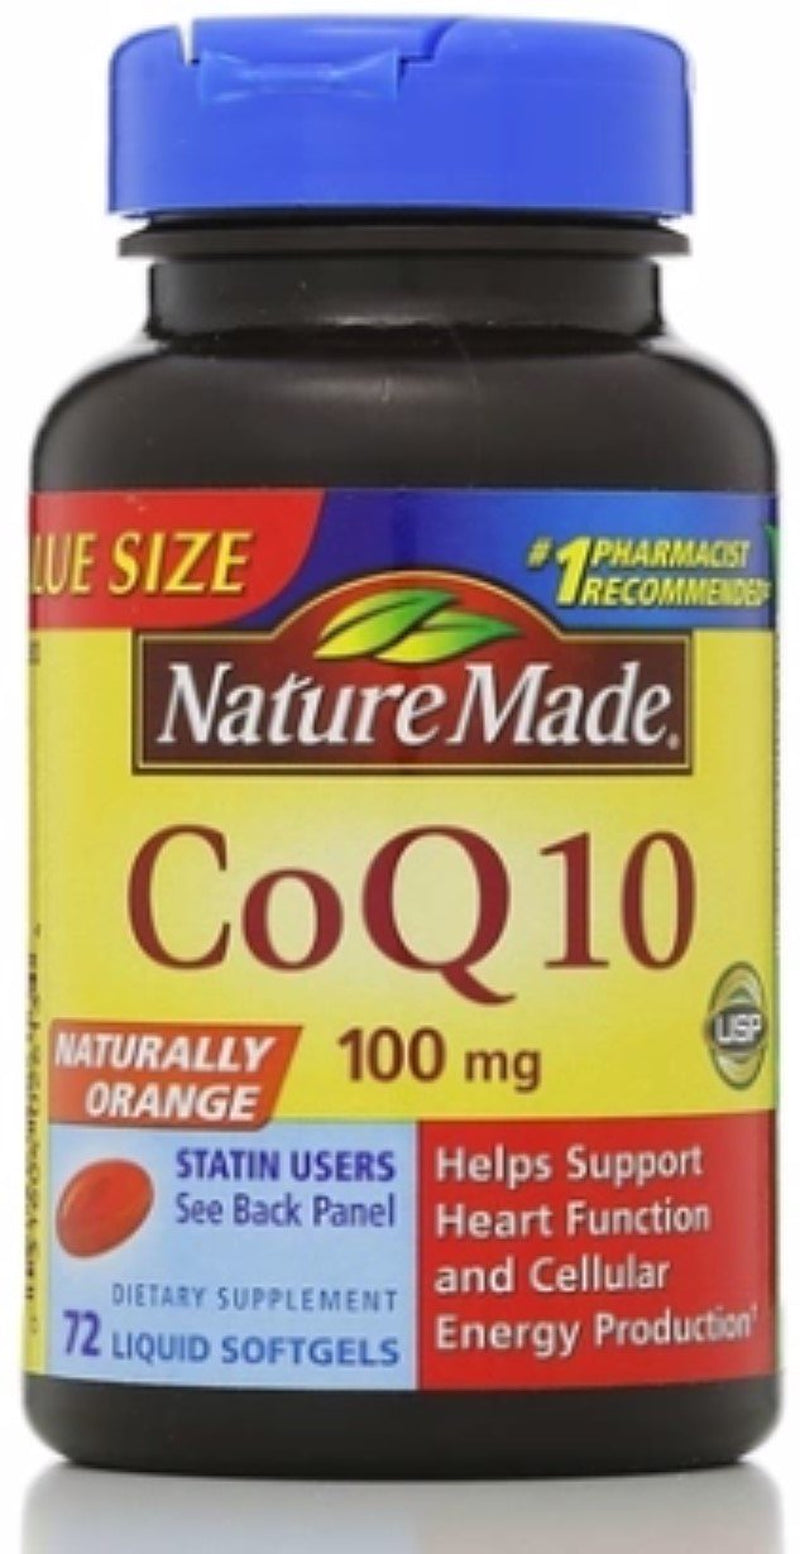 Nature Made Coq10 100 Mg Softgels, 72 Ea (Pack of 6)